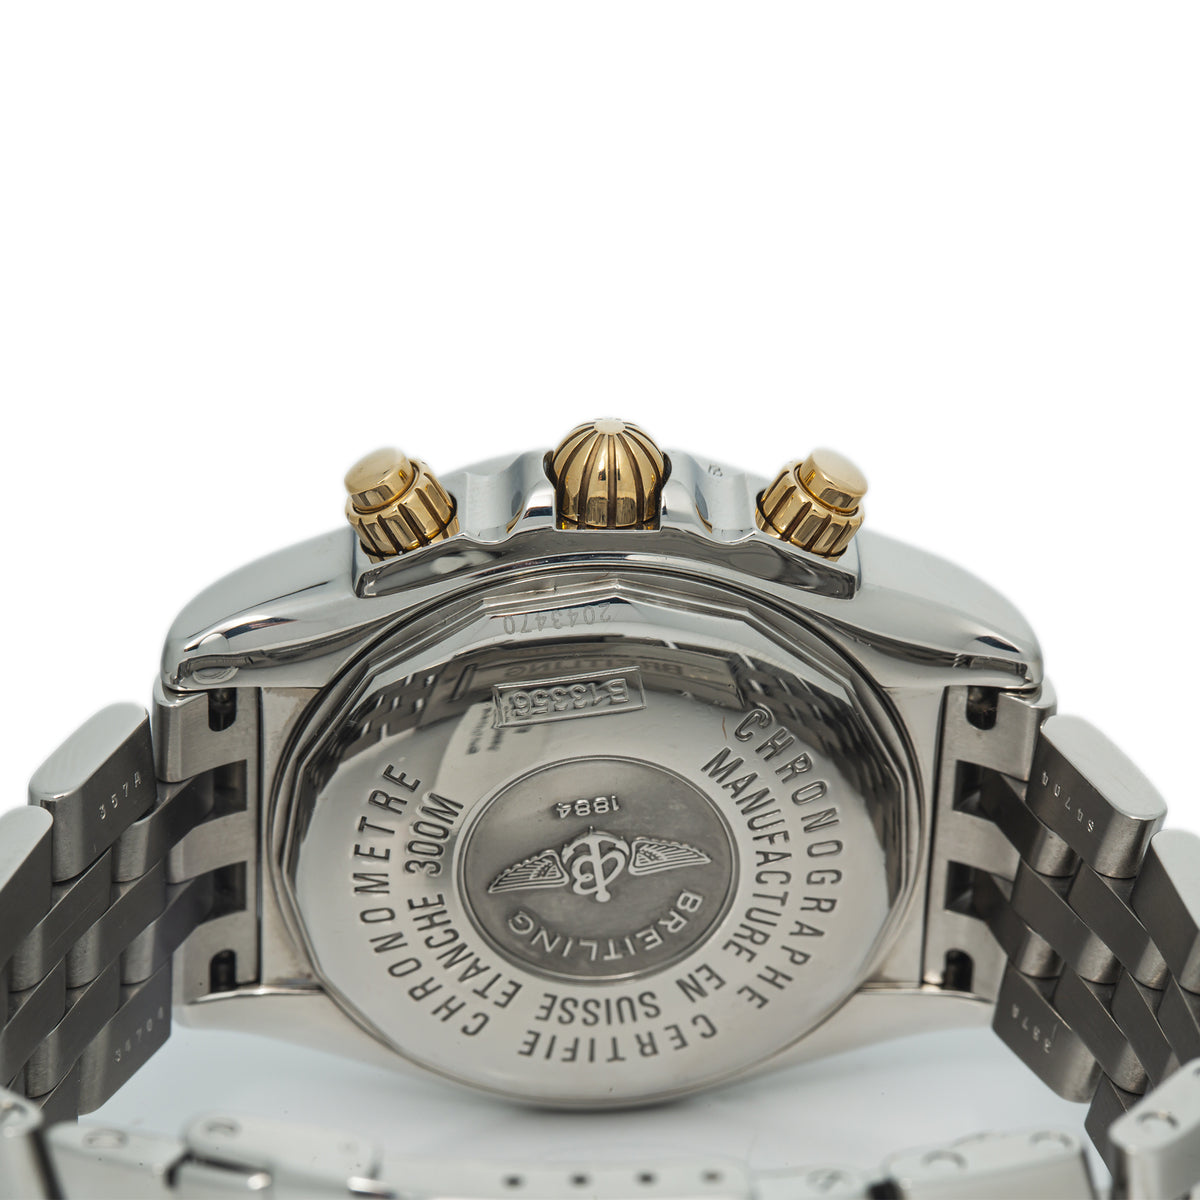 Breitling Chronomat Evolution B13356 Gold Steel Black Dial Watch 44mm Box&Paper